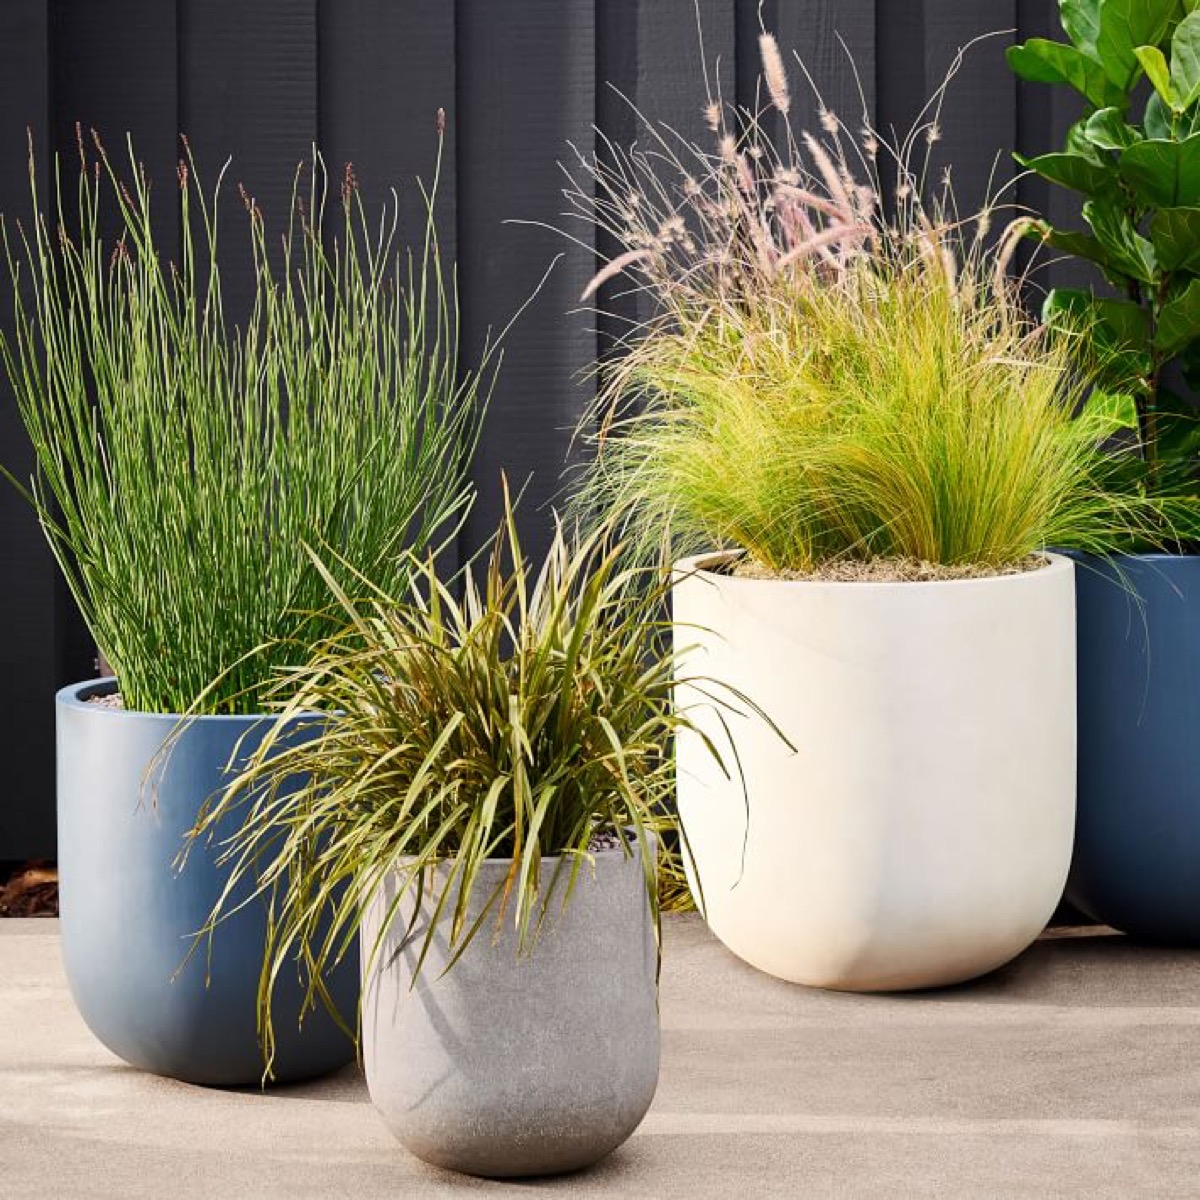 ceramic planters outdoors